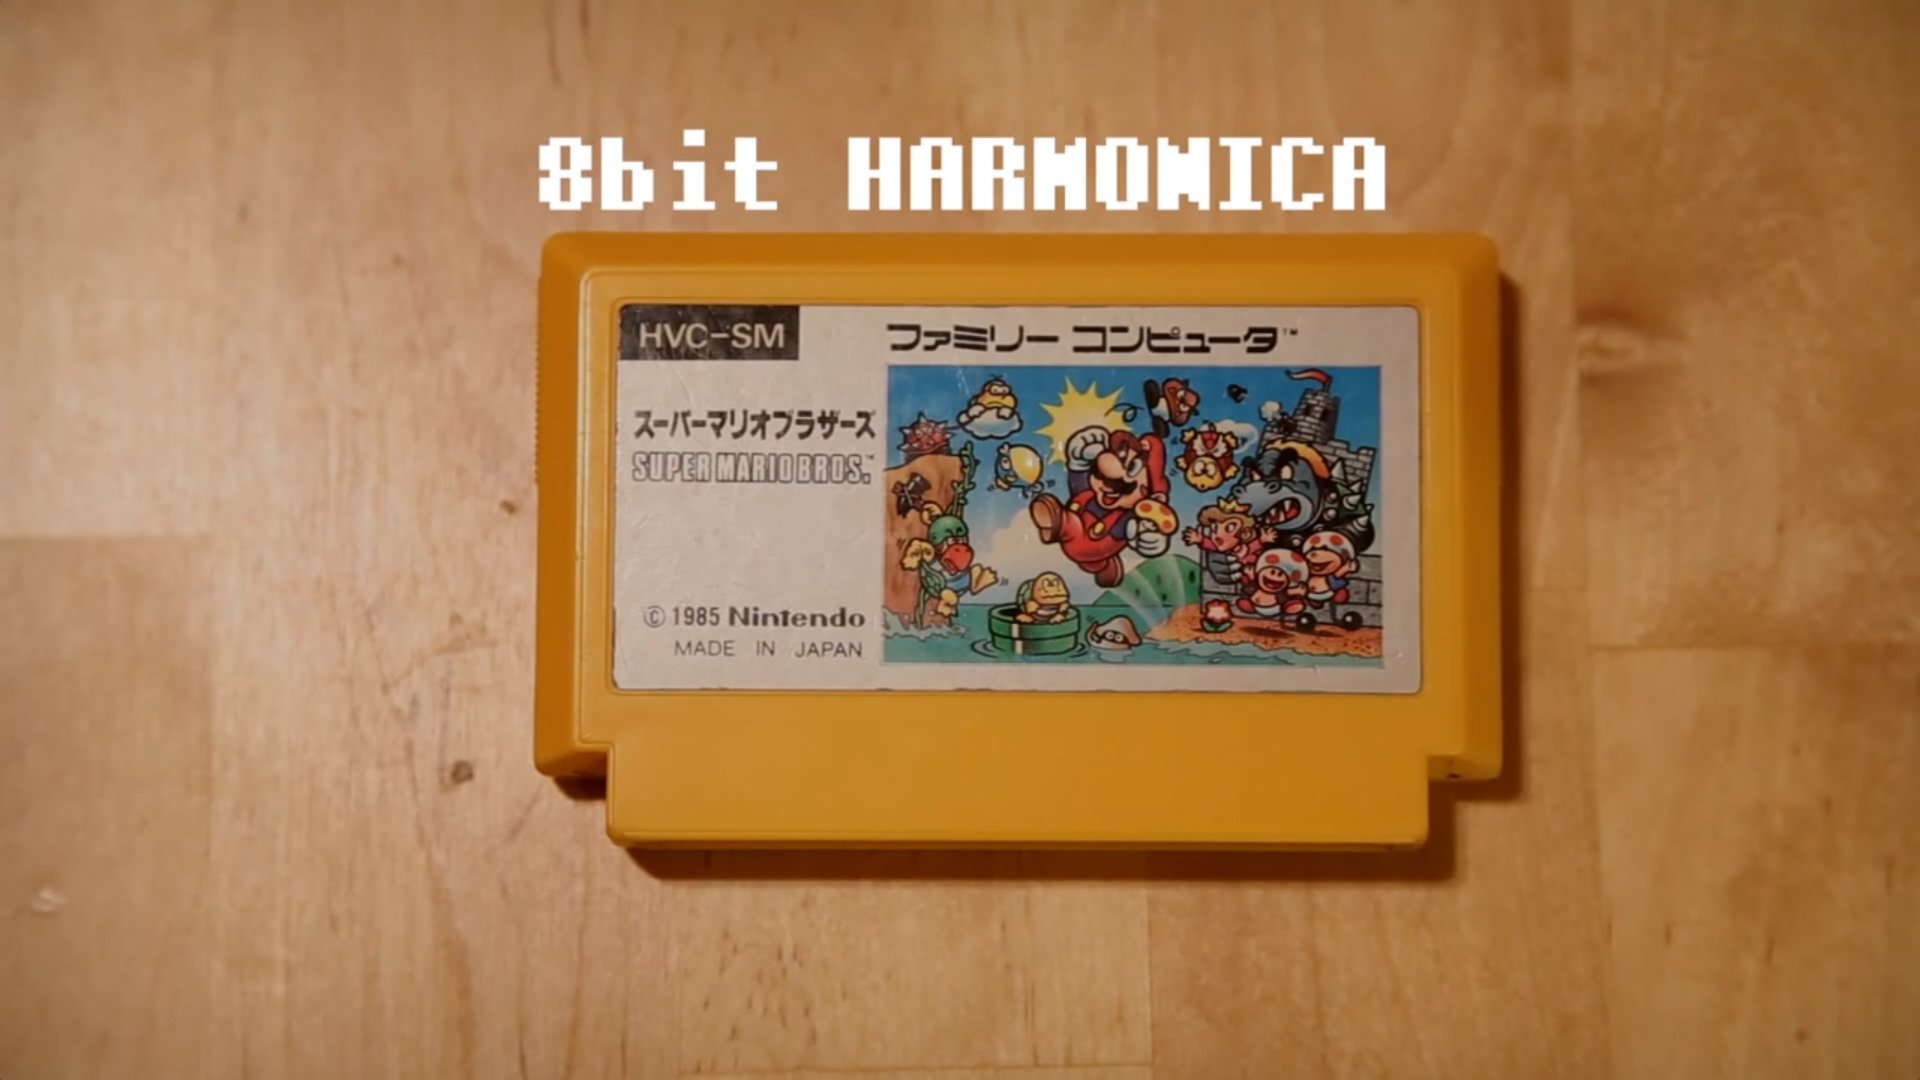 8 bit Harmonica